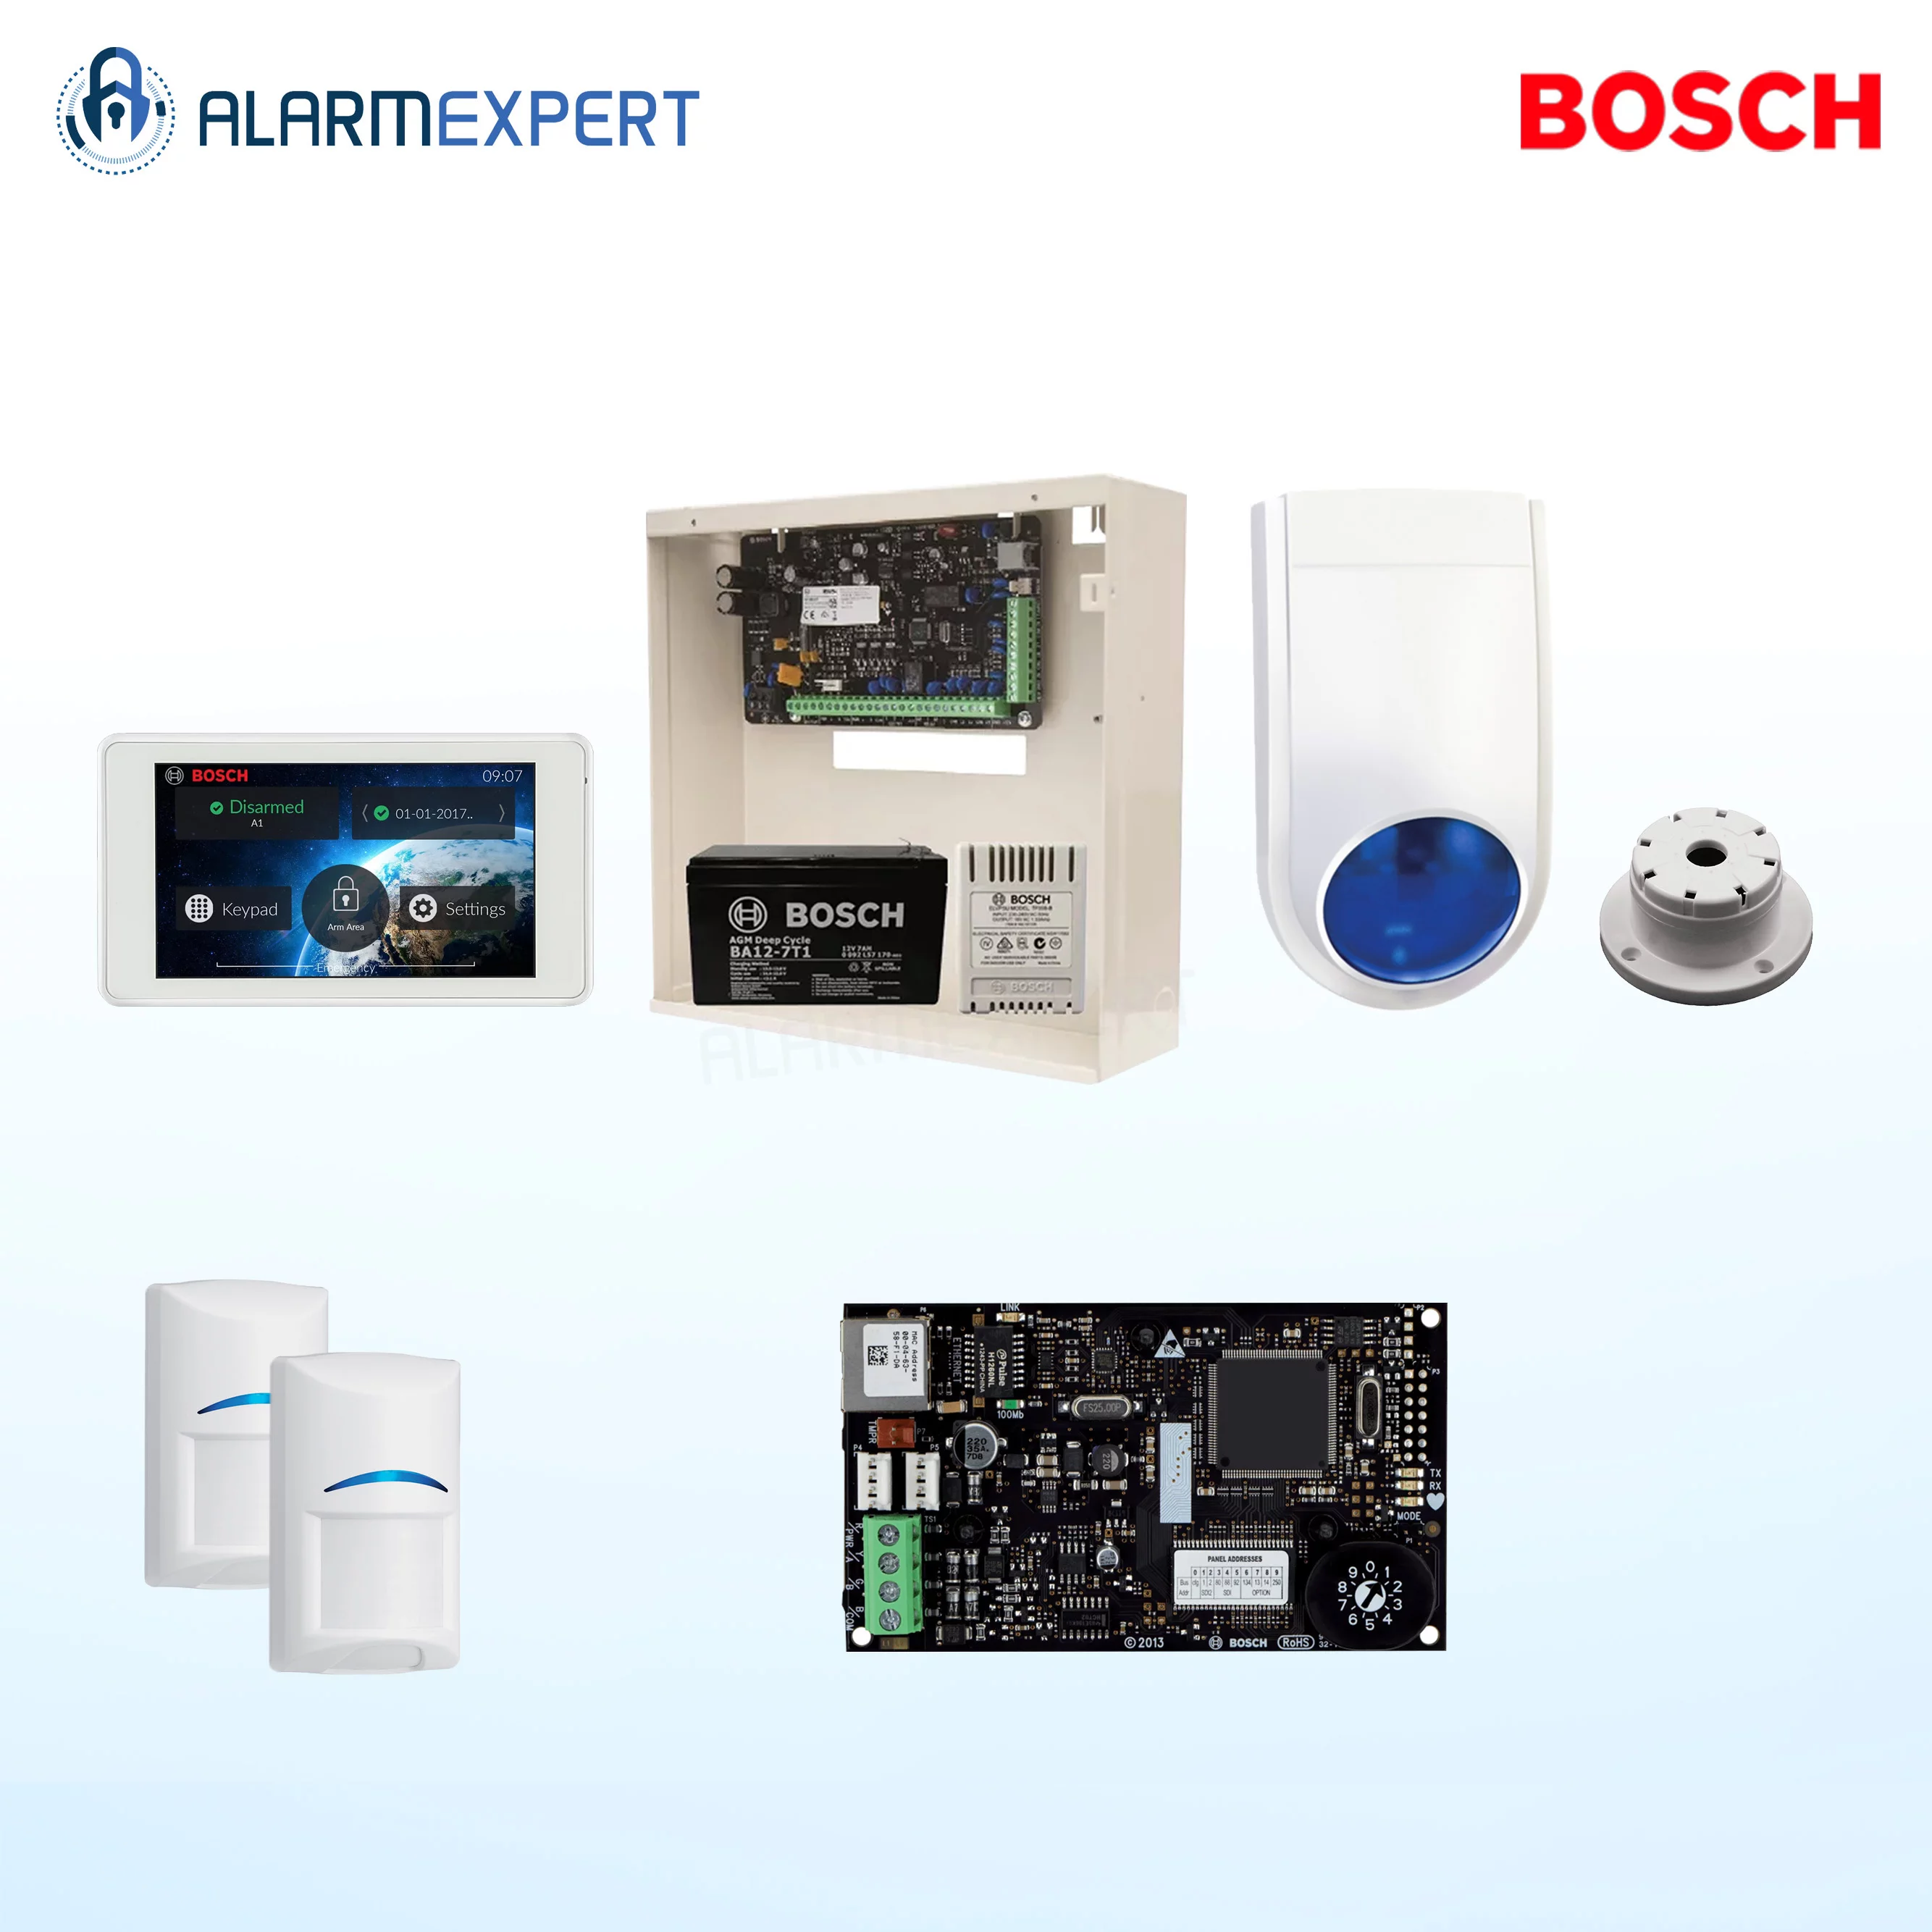 Bosch Solution 2000 IP + 2 PIRs + 5" Touch screen Keypad